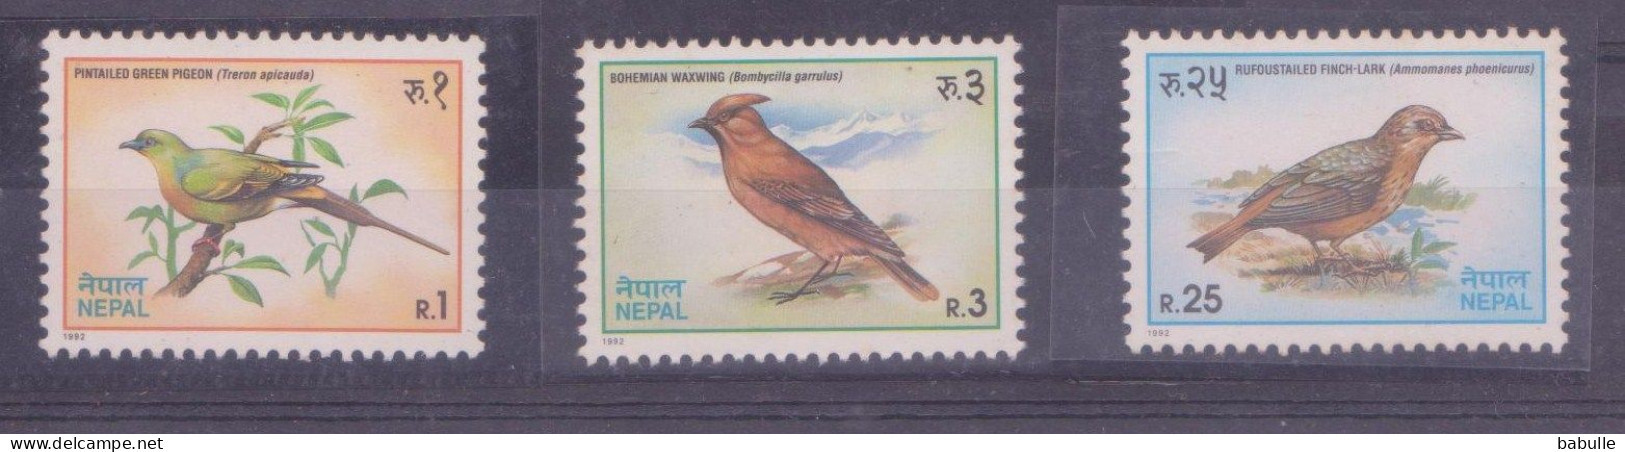 Népal - 1992 - Népal